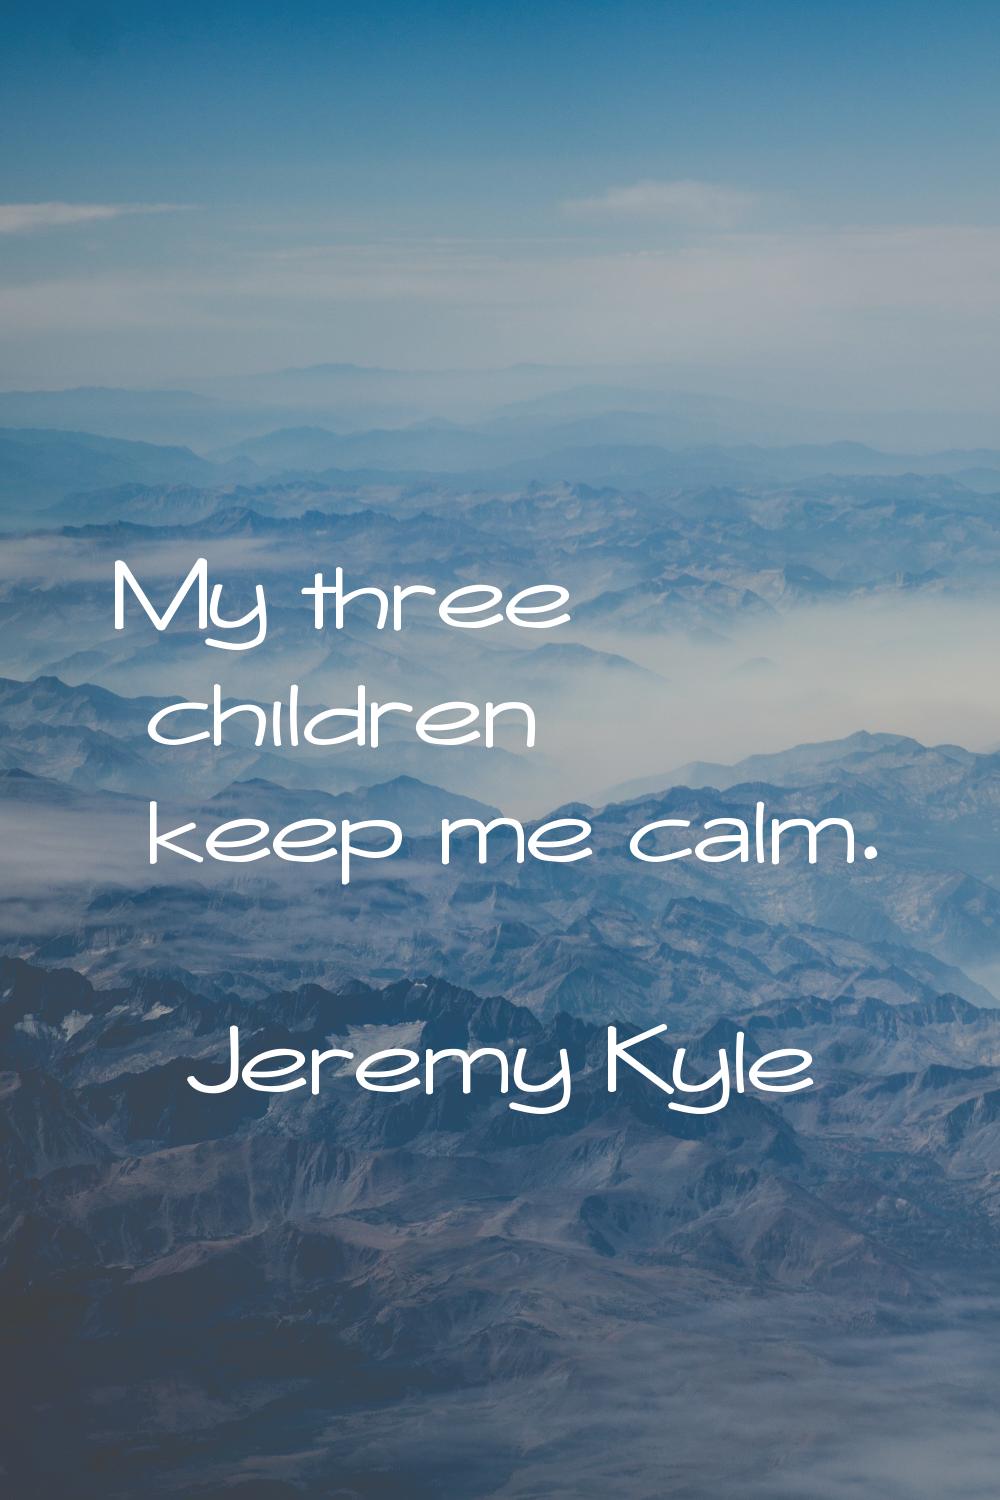 My three children keep me calm.